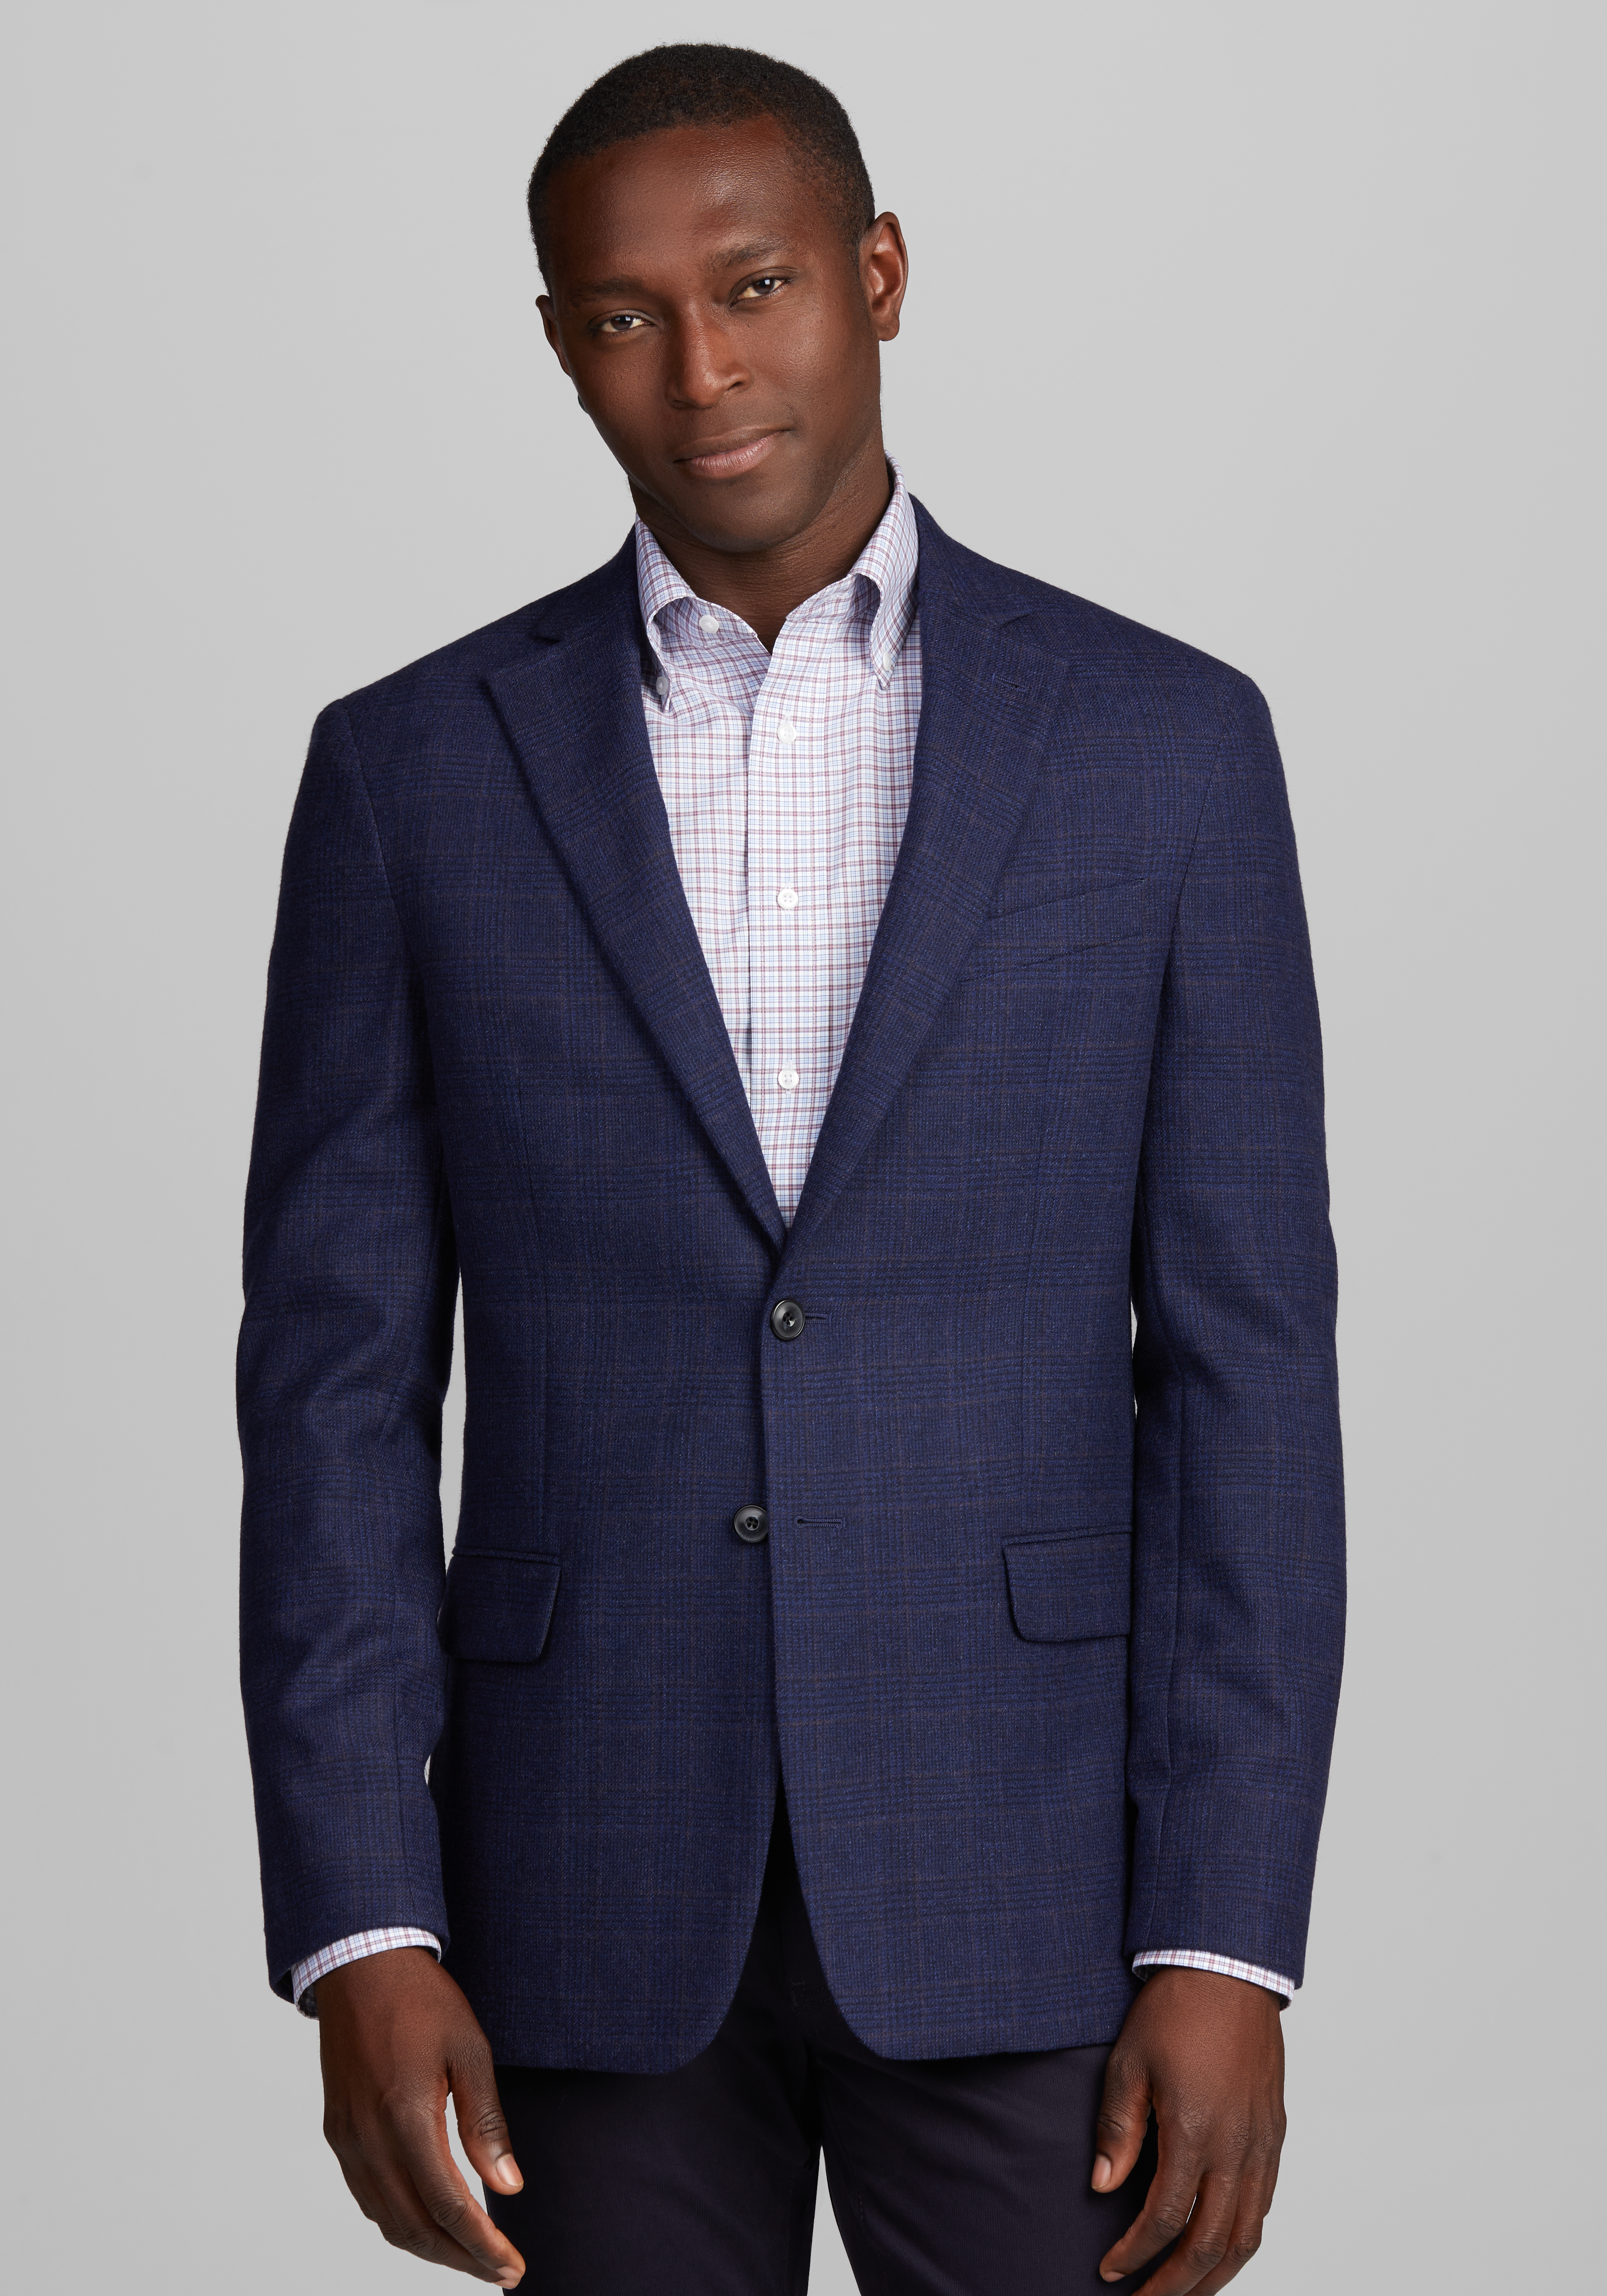 Men's Suits Clearance | Discounts + Sales | JoS. A. Bank Clothiers